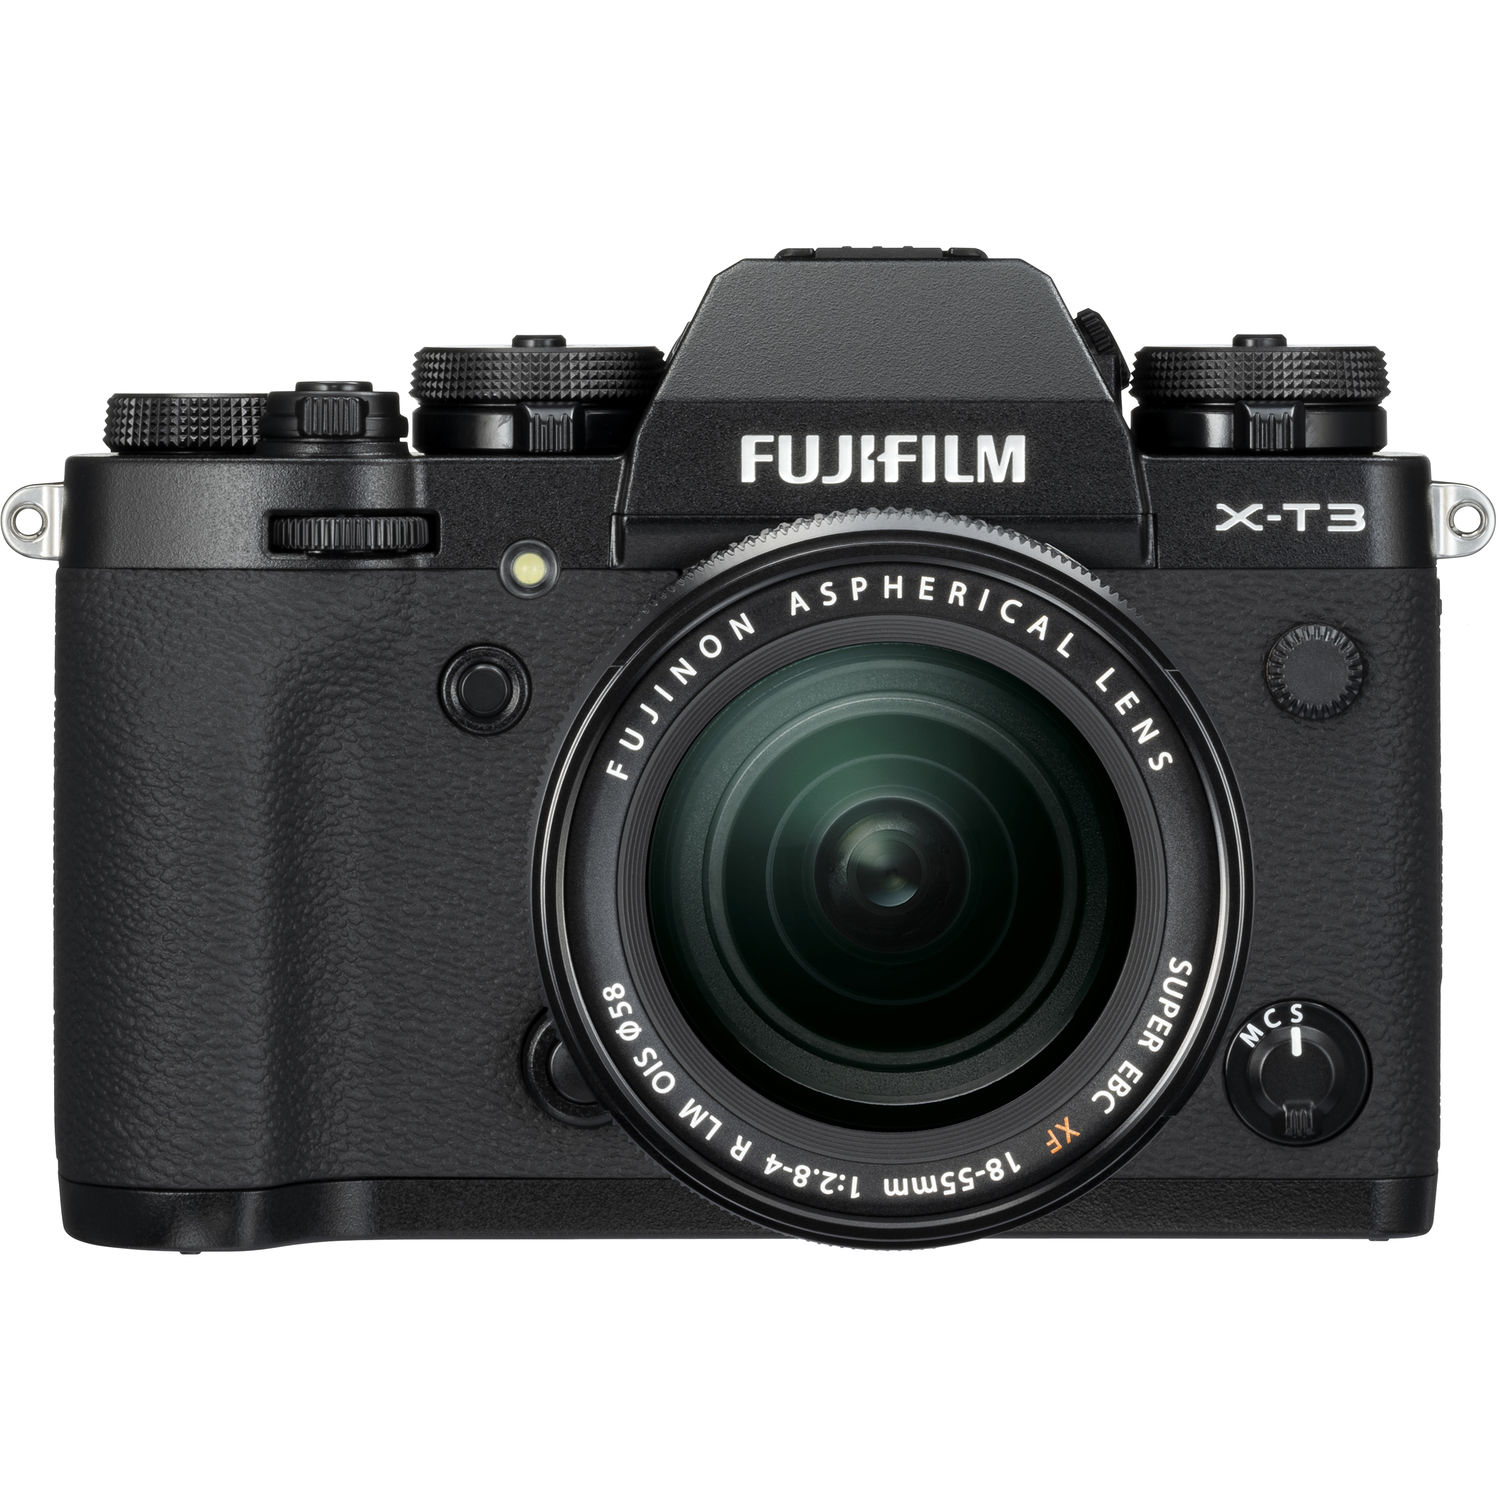 Fujifilm X-T3 Mirrorless Camera with 18-55mm Lens Kit (Black)